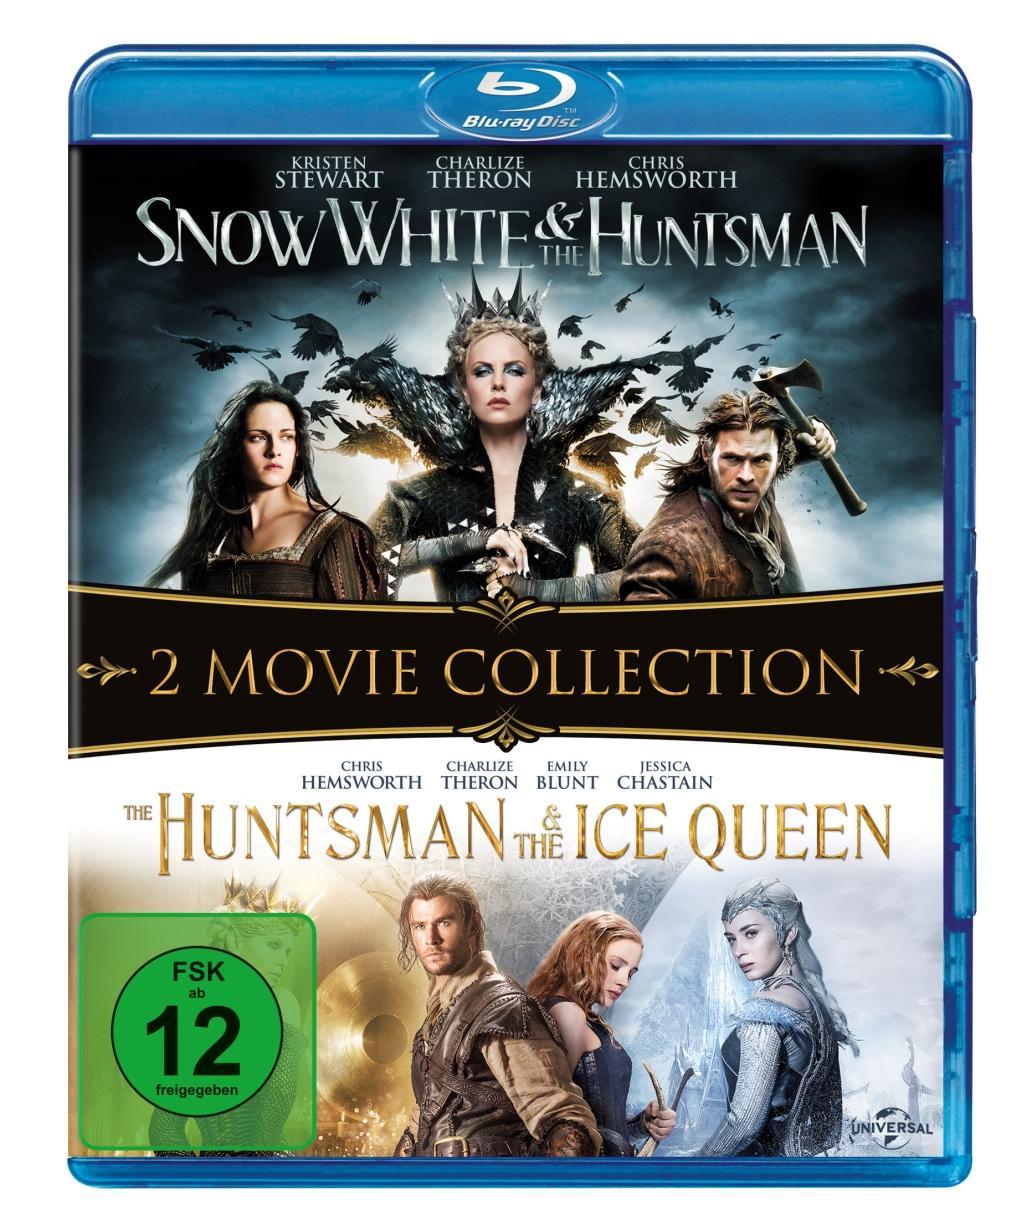 Snow White & the Huntsman & The Huntsman & the Ice Queen